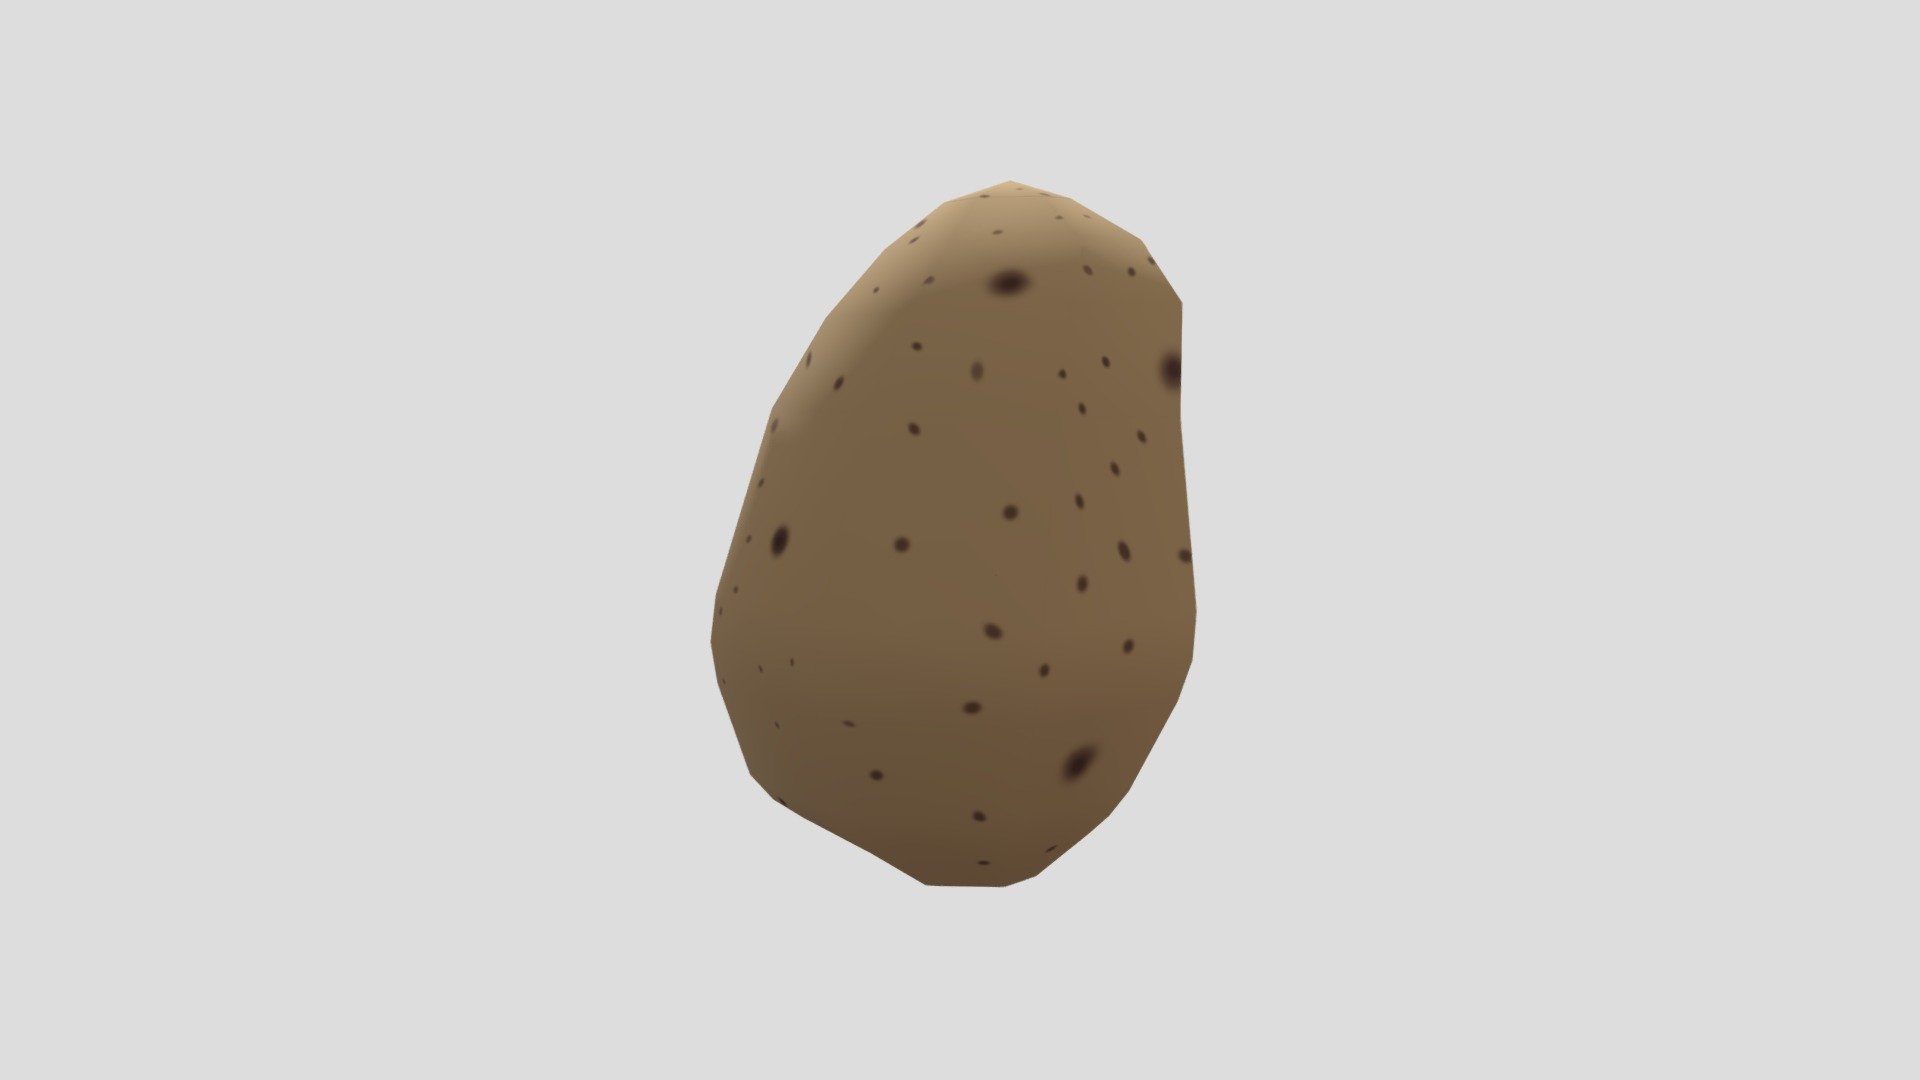 Red Potatoe - 3D Model by sanchiesp